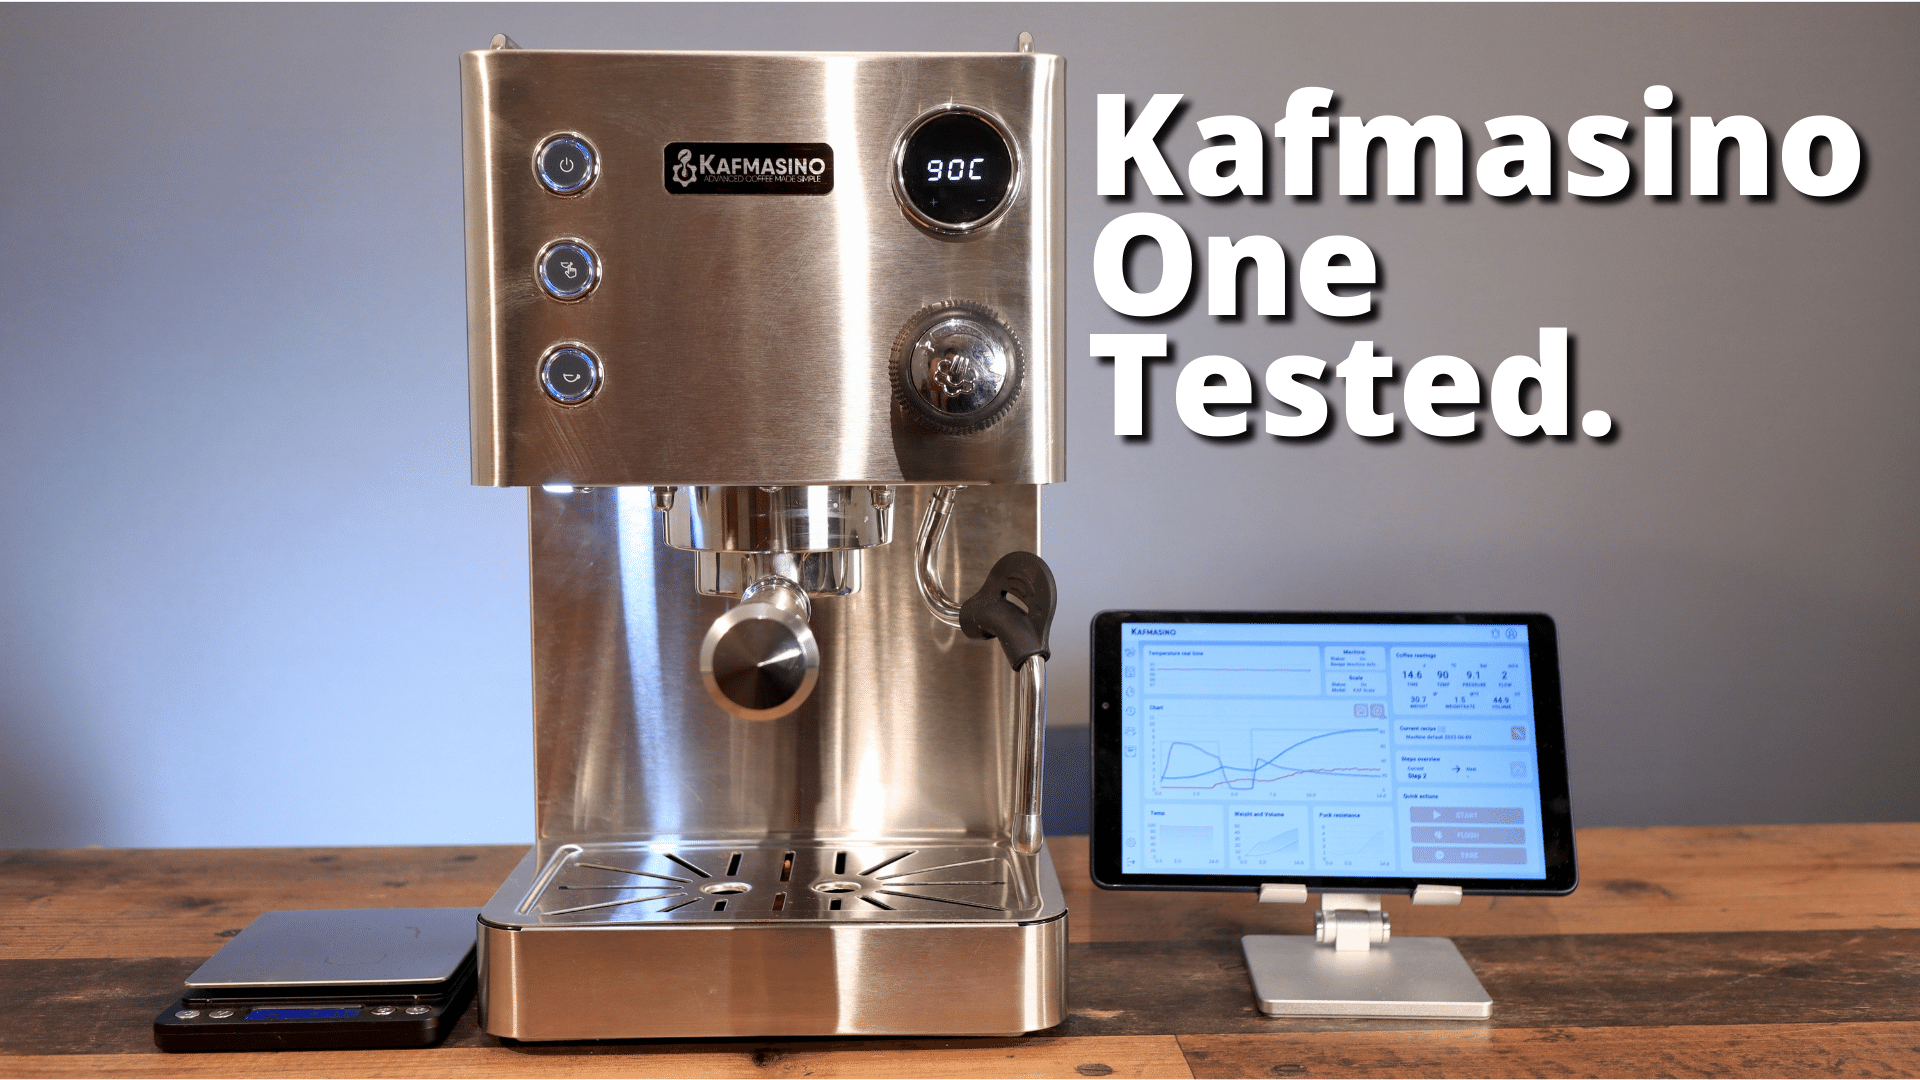 This is the highly awaited Kafmasino one coffee machine